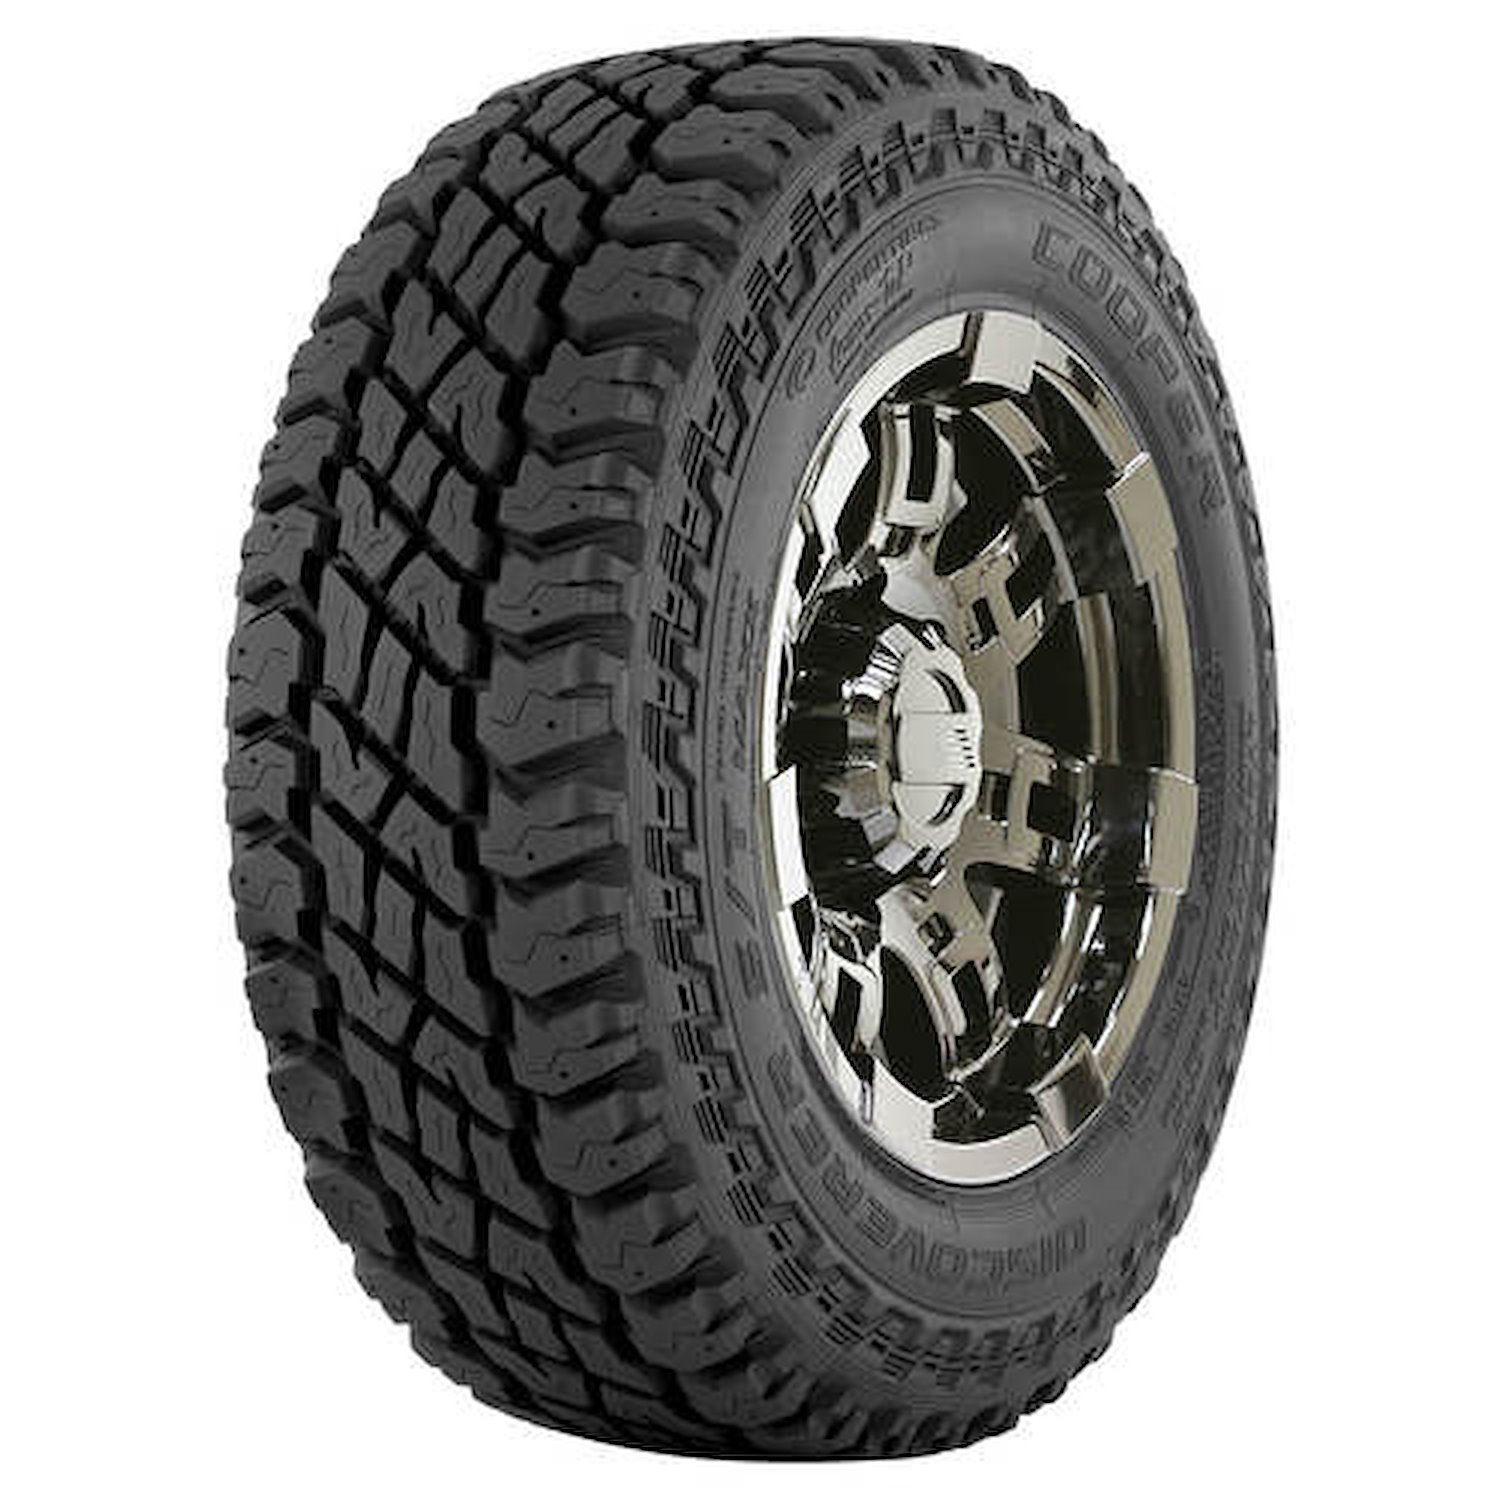 Discoverer S/T Maxx All-Terrain Tire, LT305/70R18